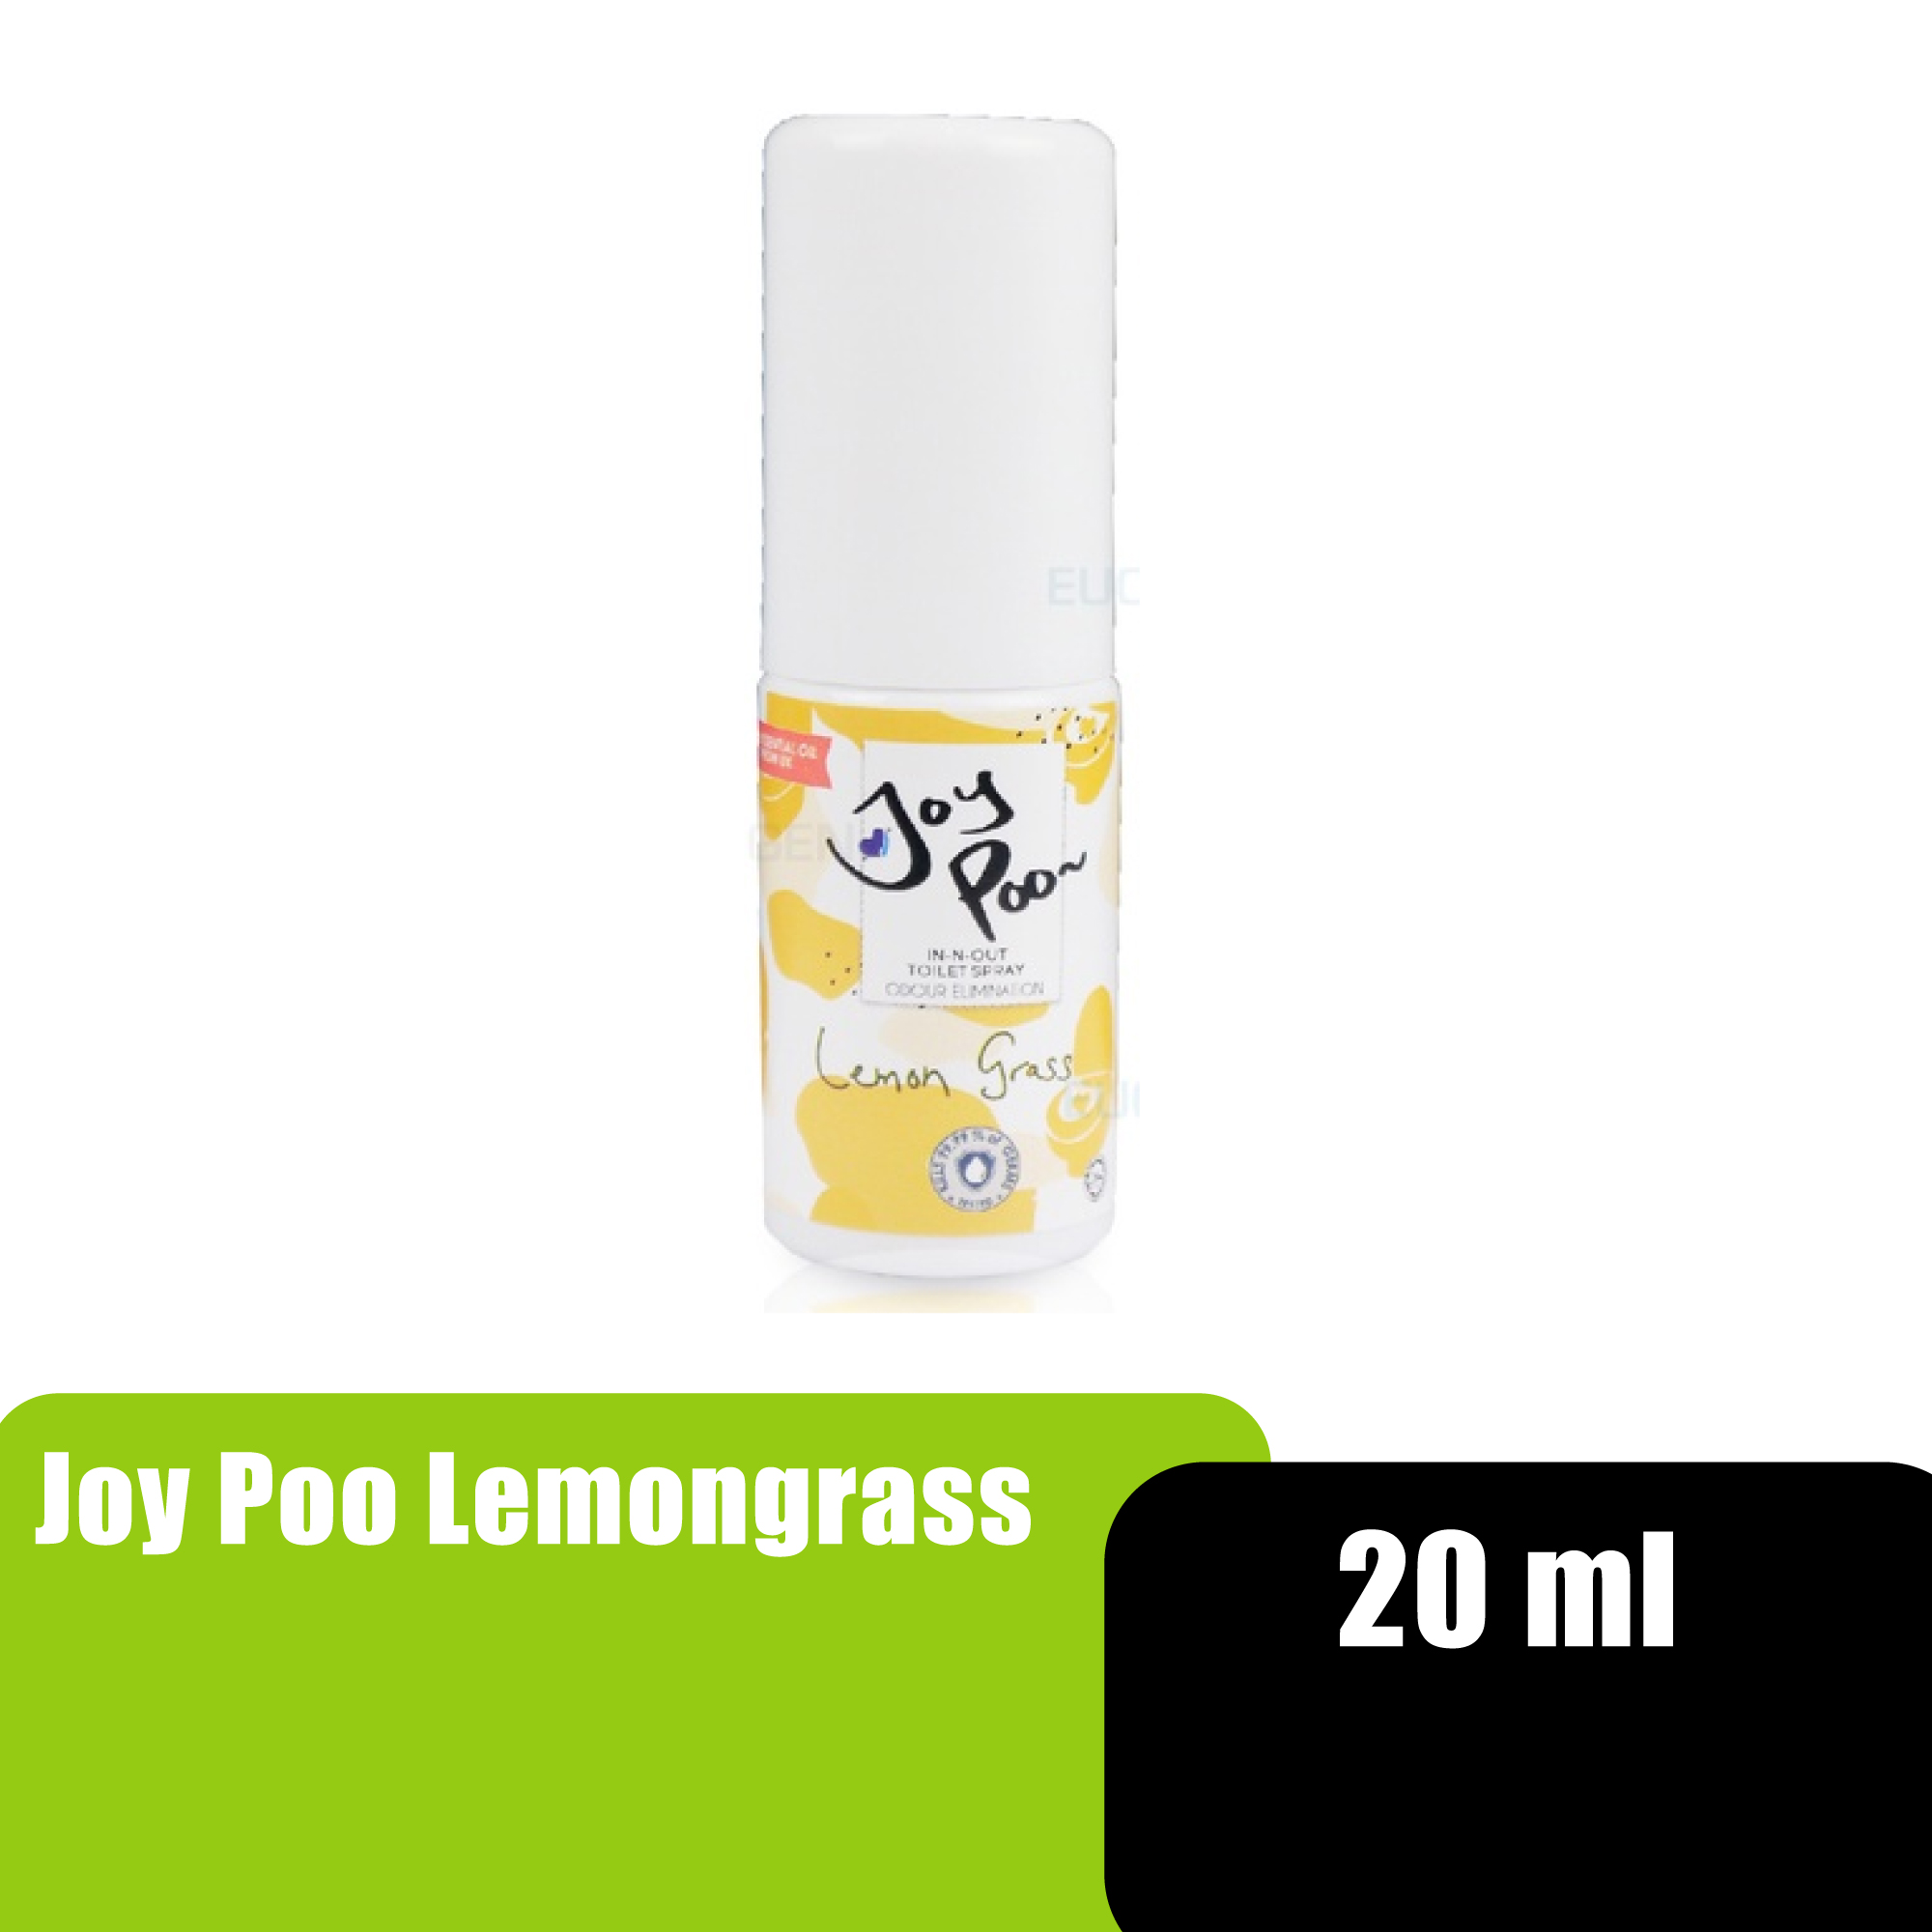 JOY POO 20ML - LEMONGRASS